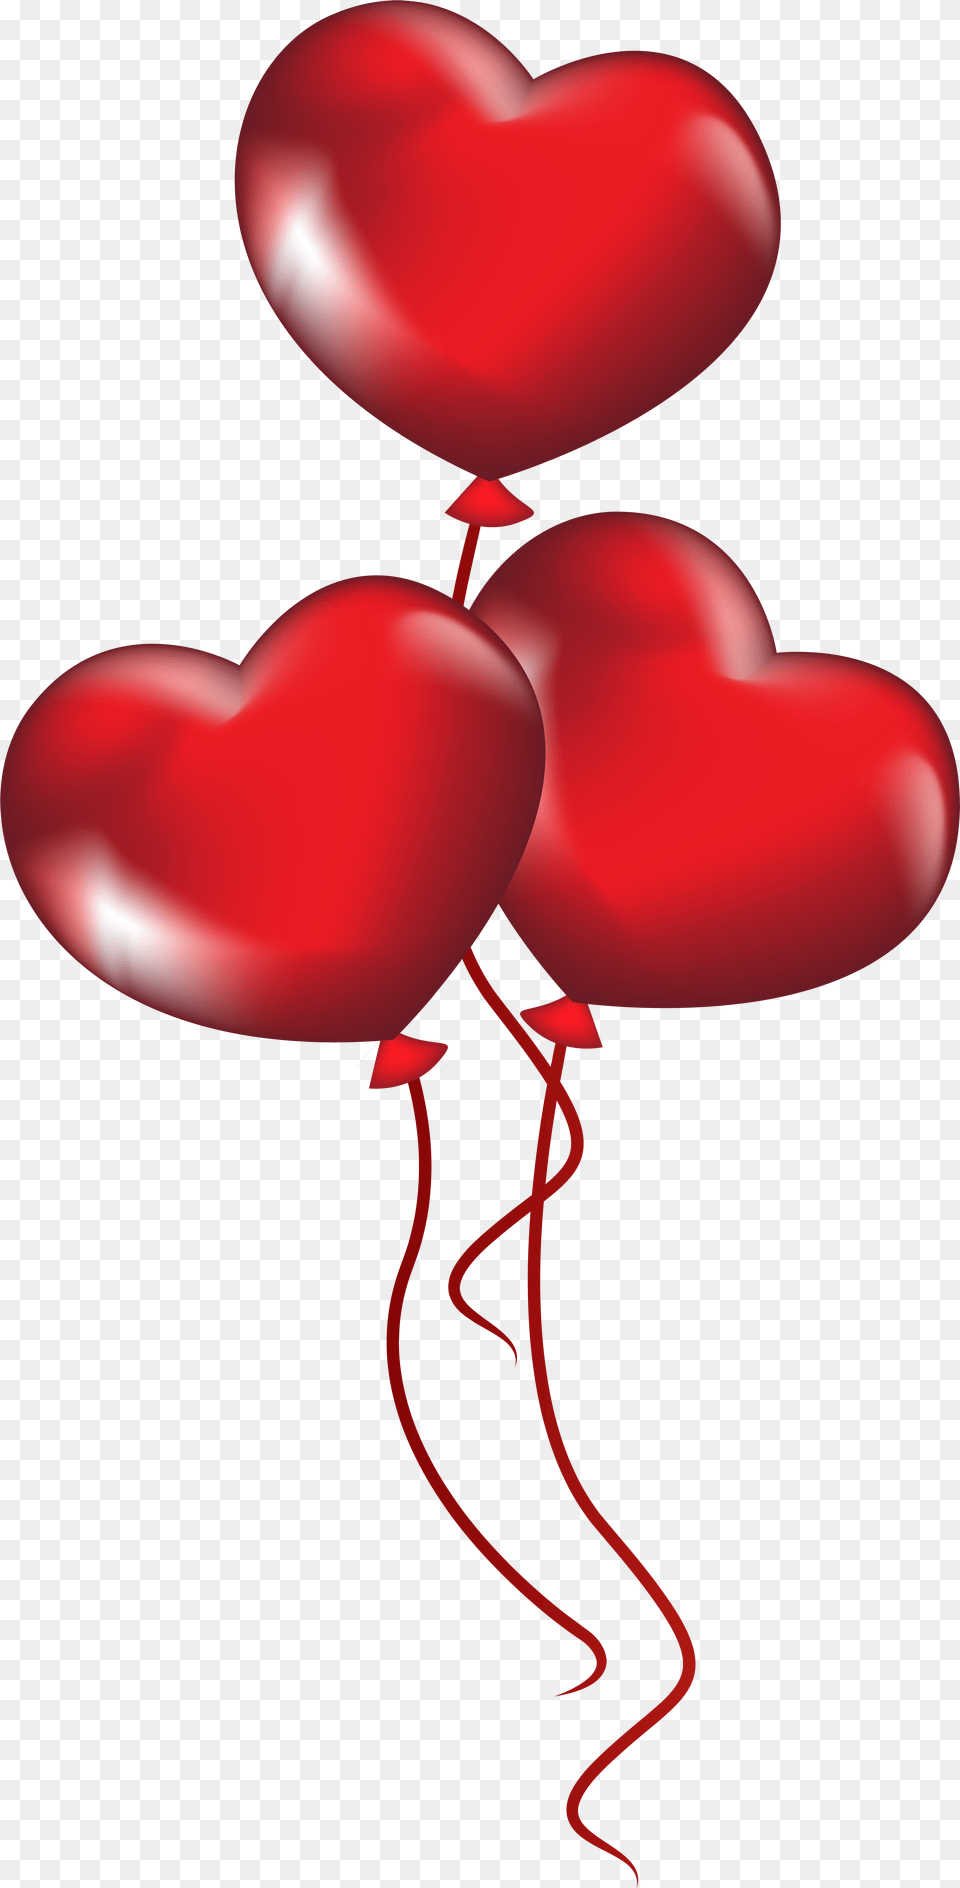 Heart Balloon Transparent Background Clipart Full Size Heart Balloon Transparent Background Png